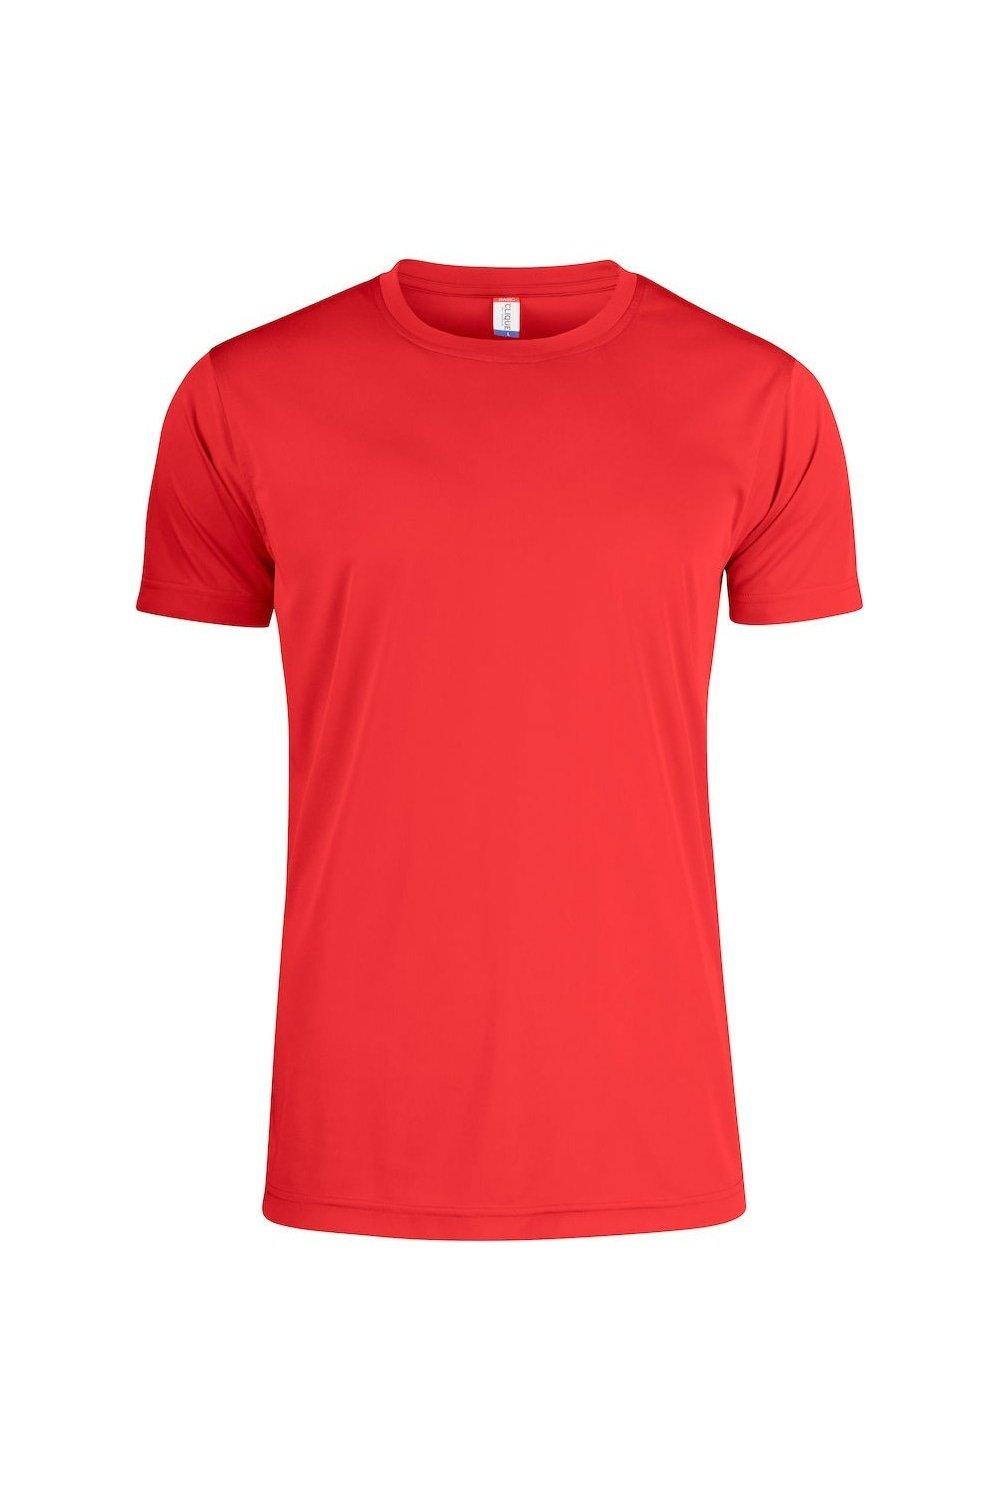 Активная футболка Clique, красный футболка clique с надписью 42 размер